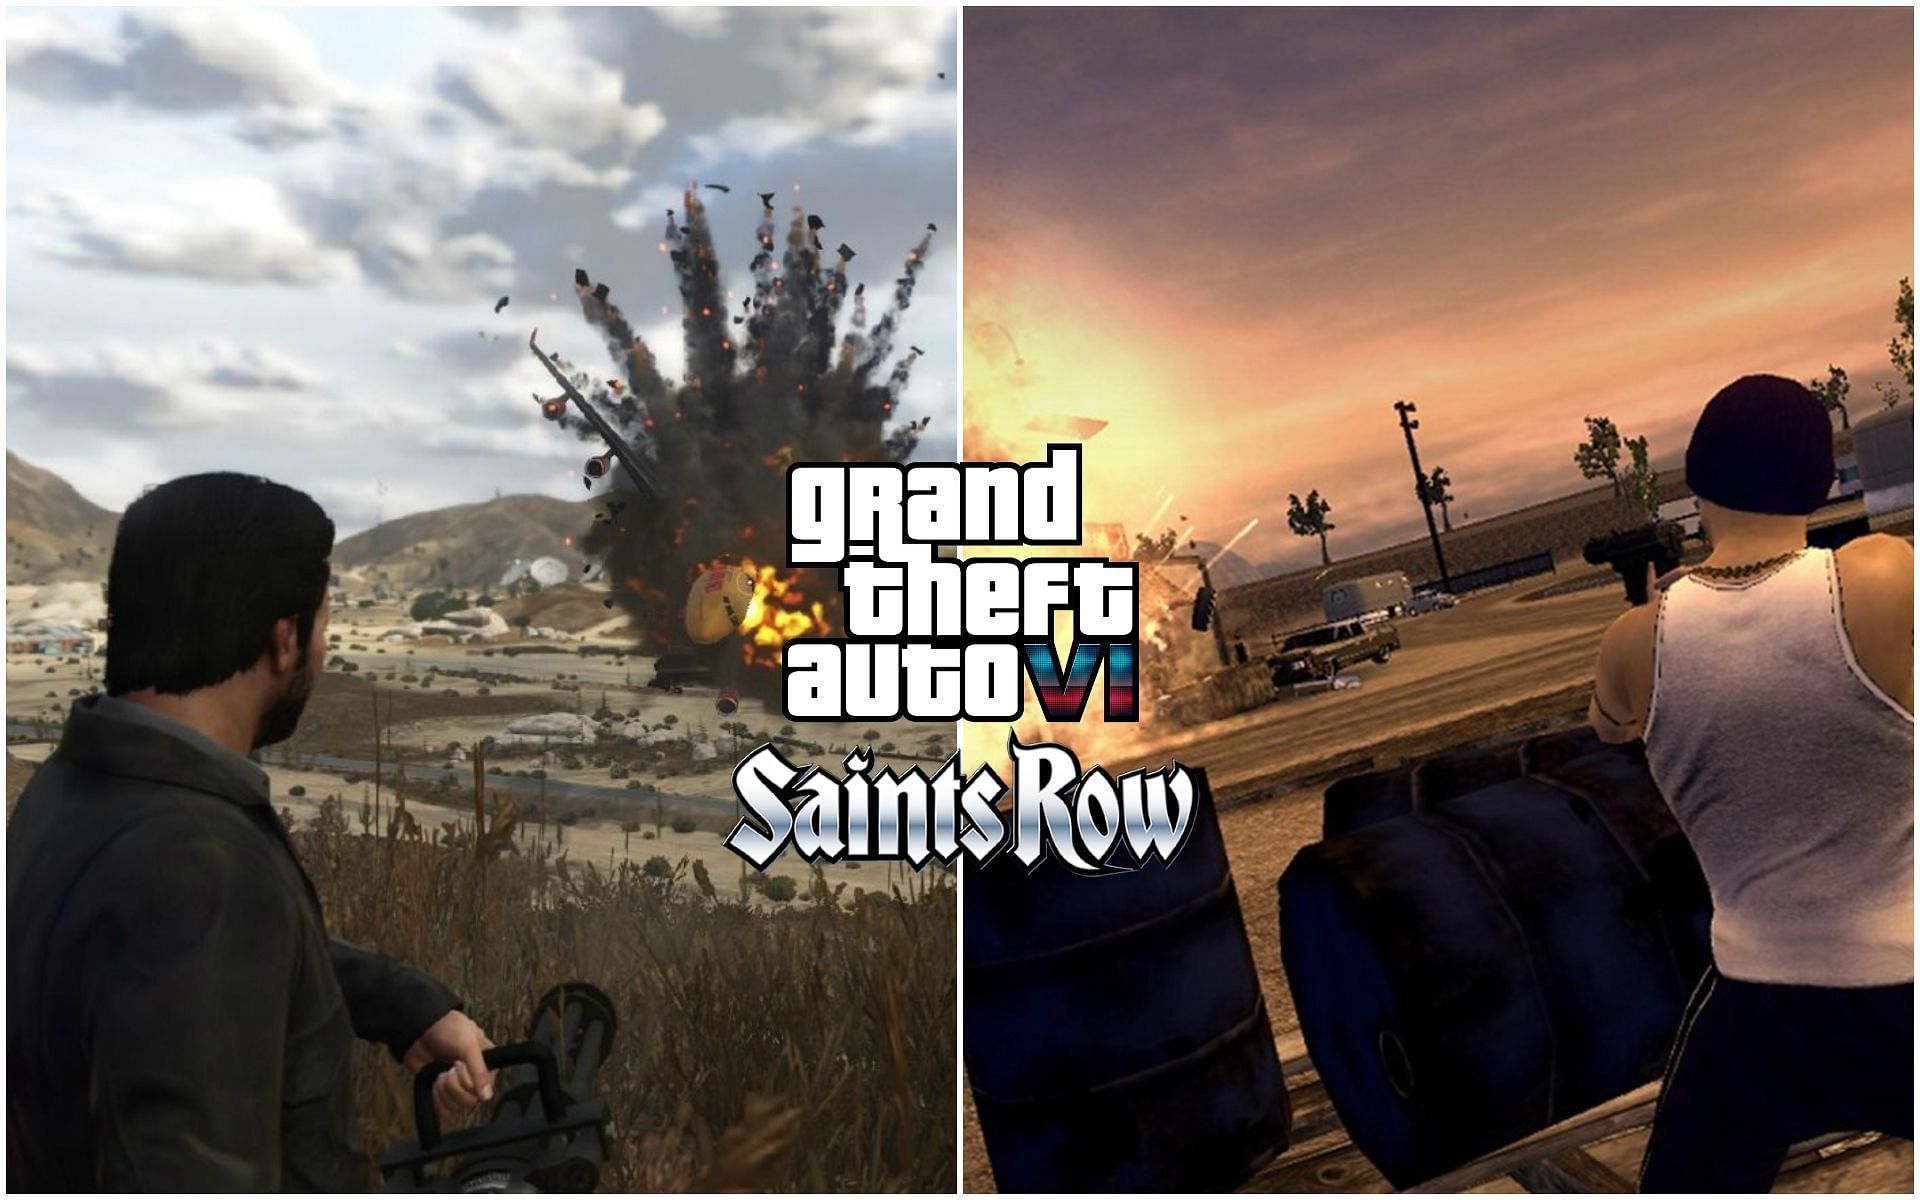 The Saints Row series has been a rival to Grand Theft Auto (Image via Sportskeeda)